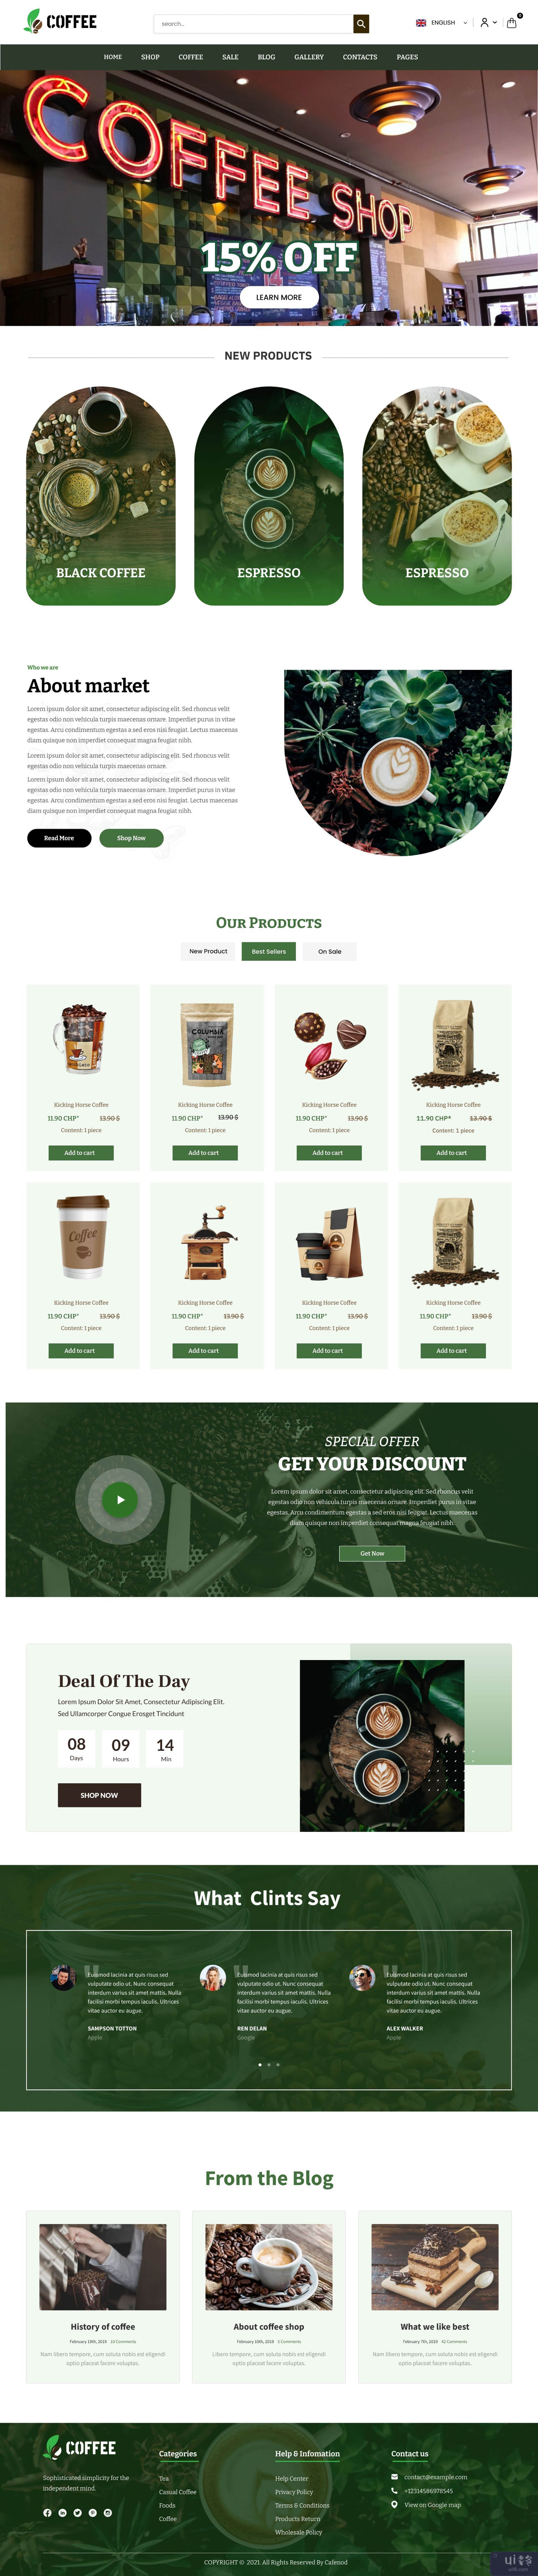 咖啡店电子商务网站登陆页面(Coffee Shop Ecommerce Website Landing Page)插图2